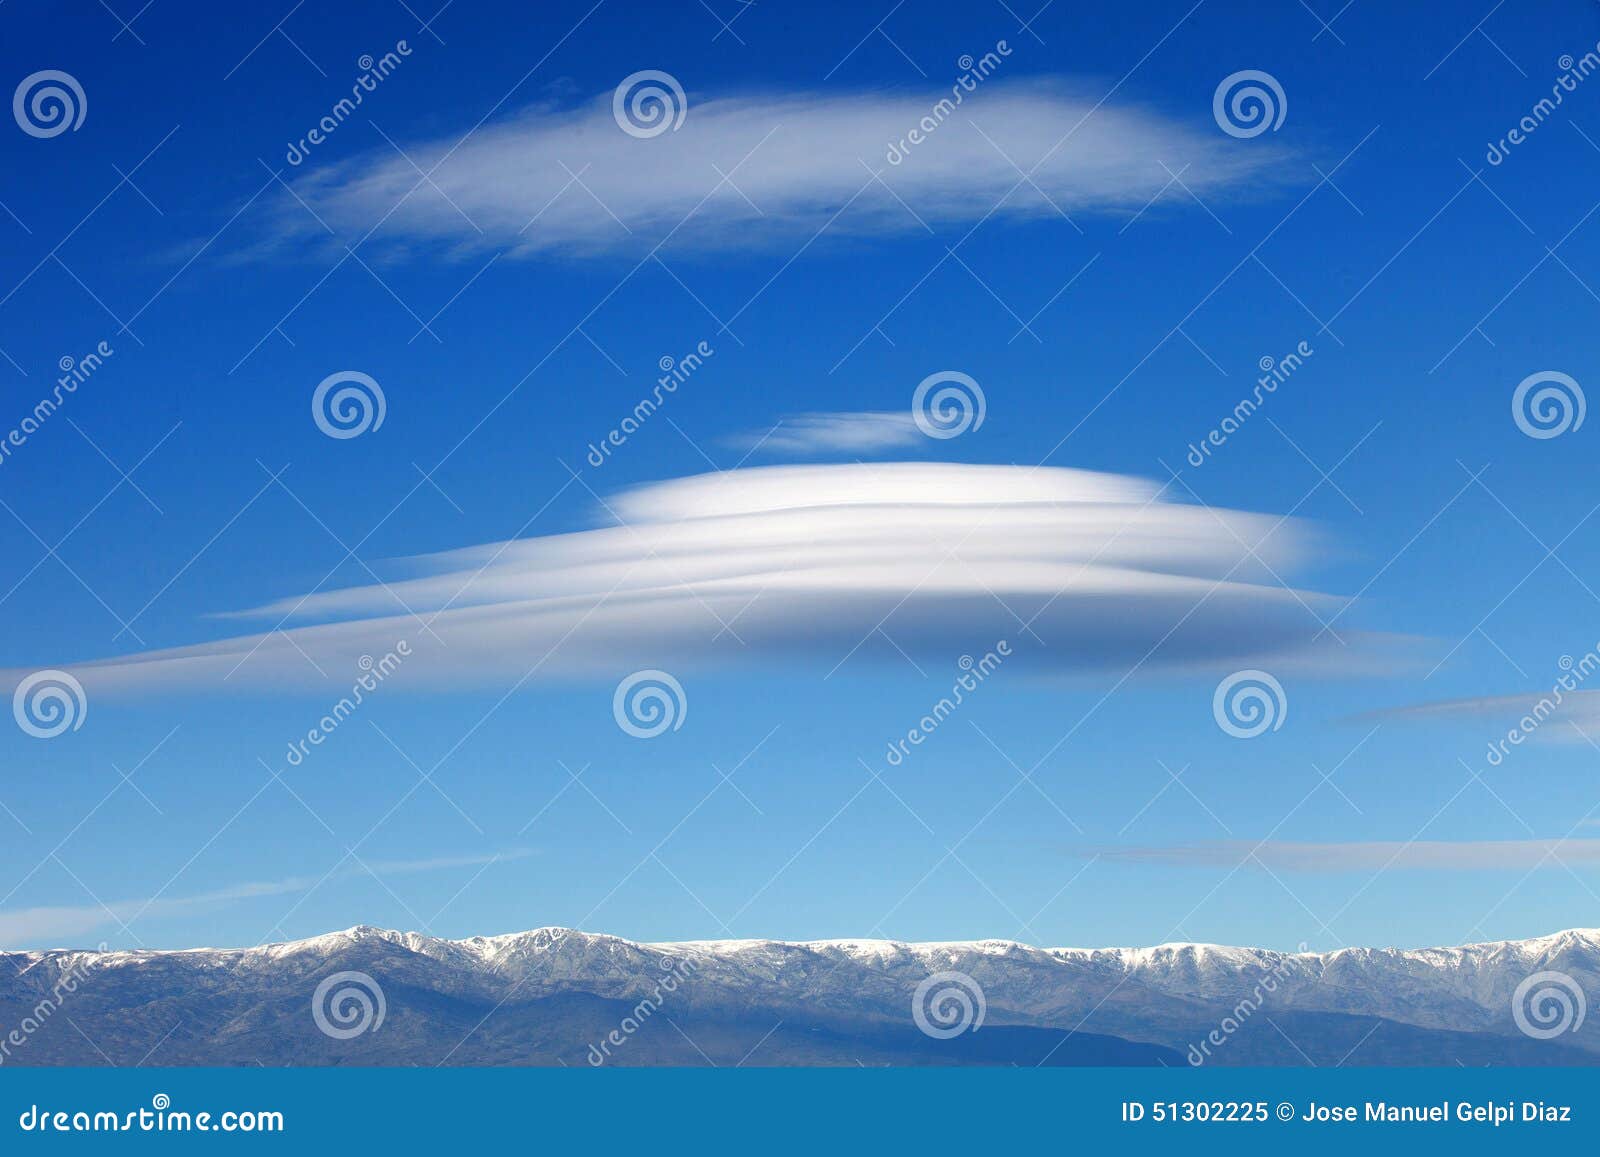 big lenticularis cloud and snowed mountain